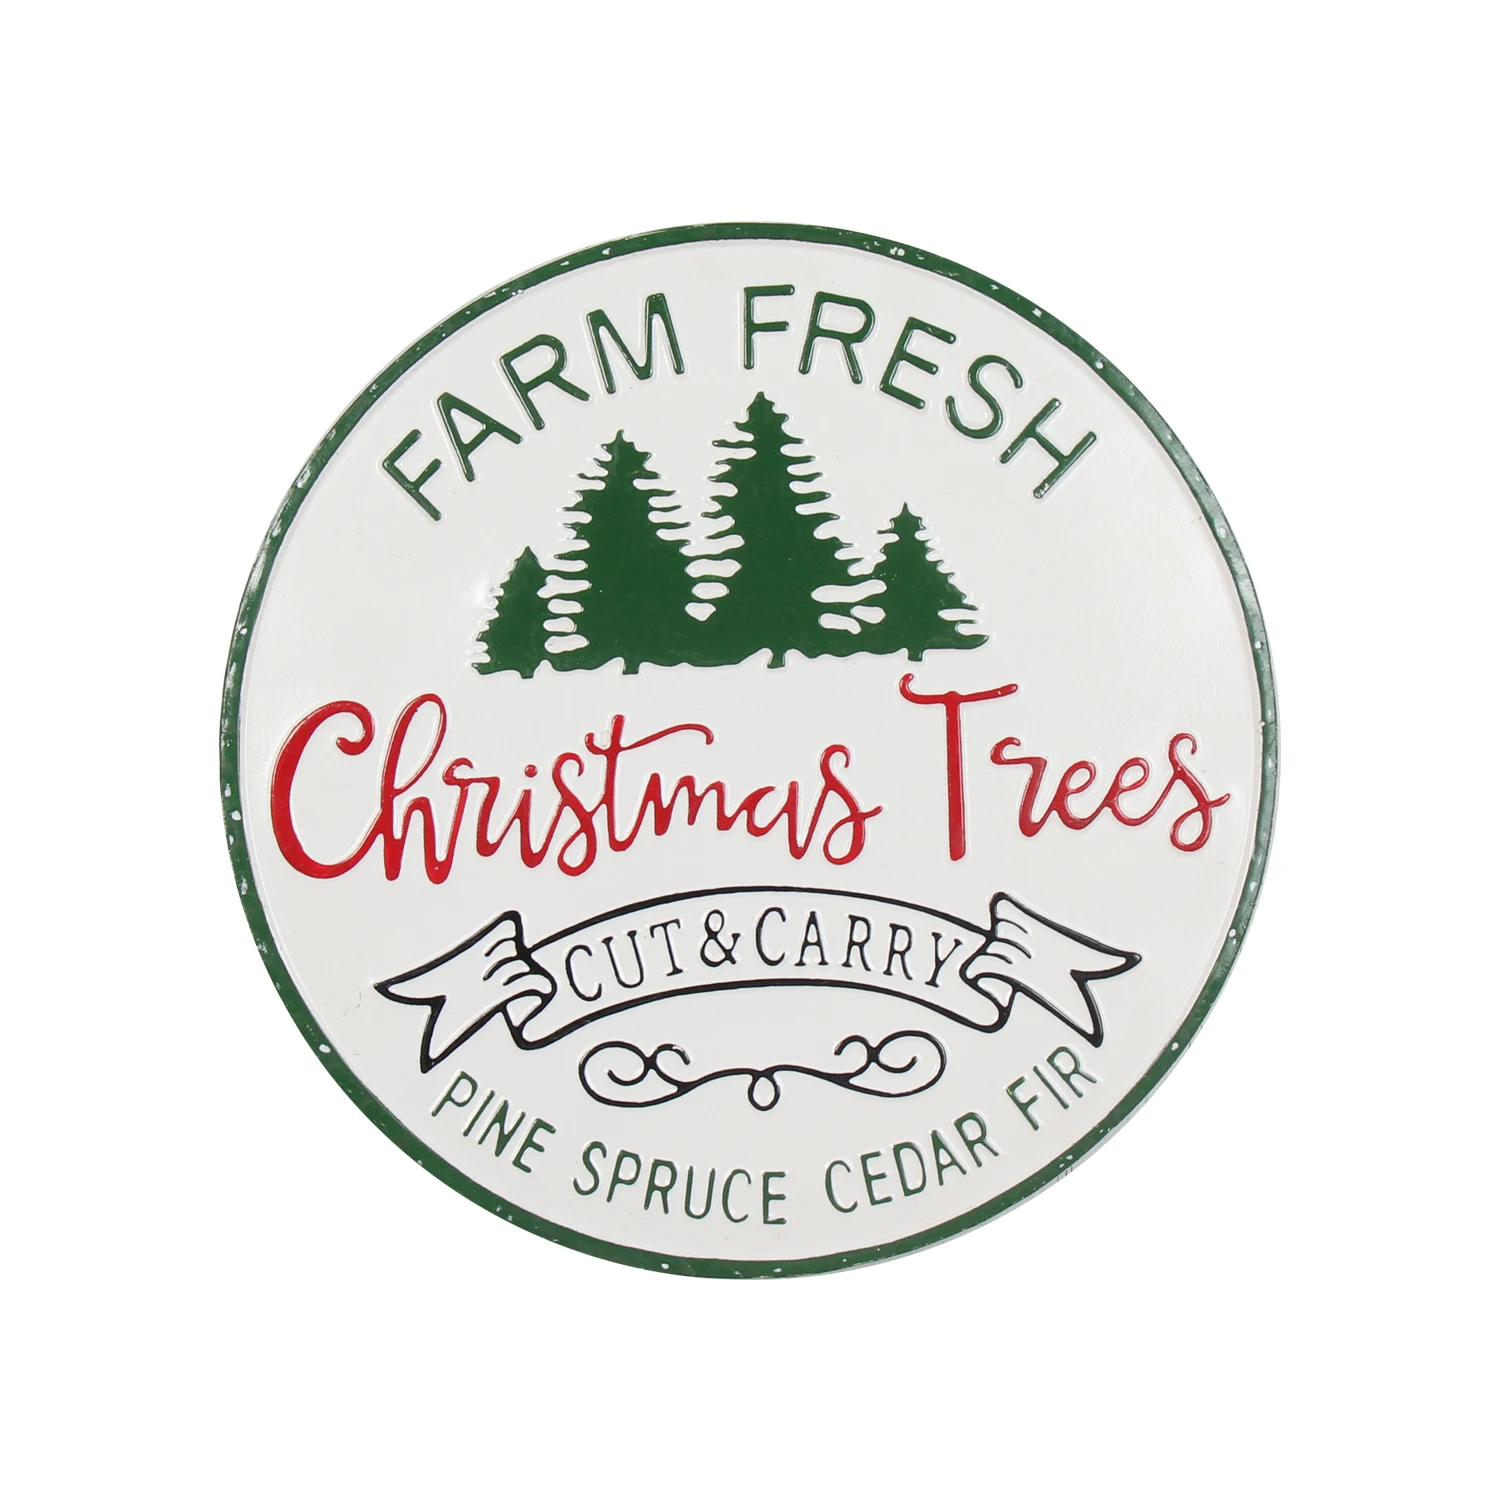 HYKING Farm Fresh Chirstmas Trees Press Tin Wall Decor Christmas Decorations Outdoor